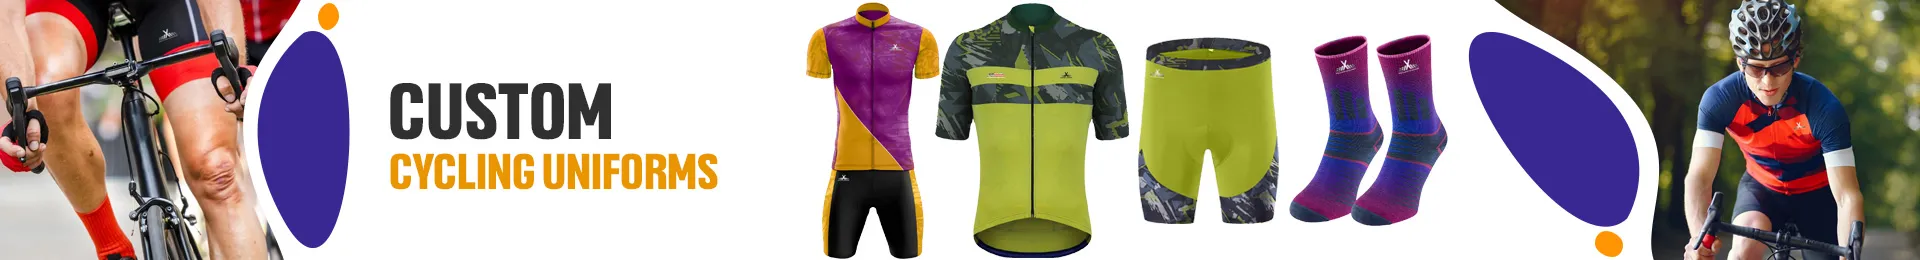 custom-cycling-uniforms